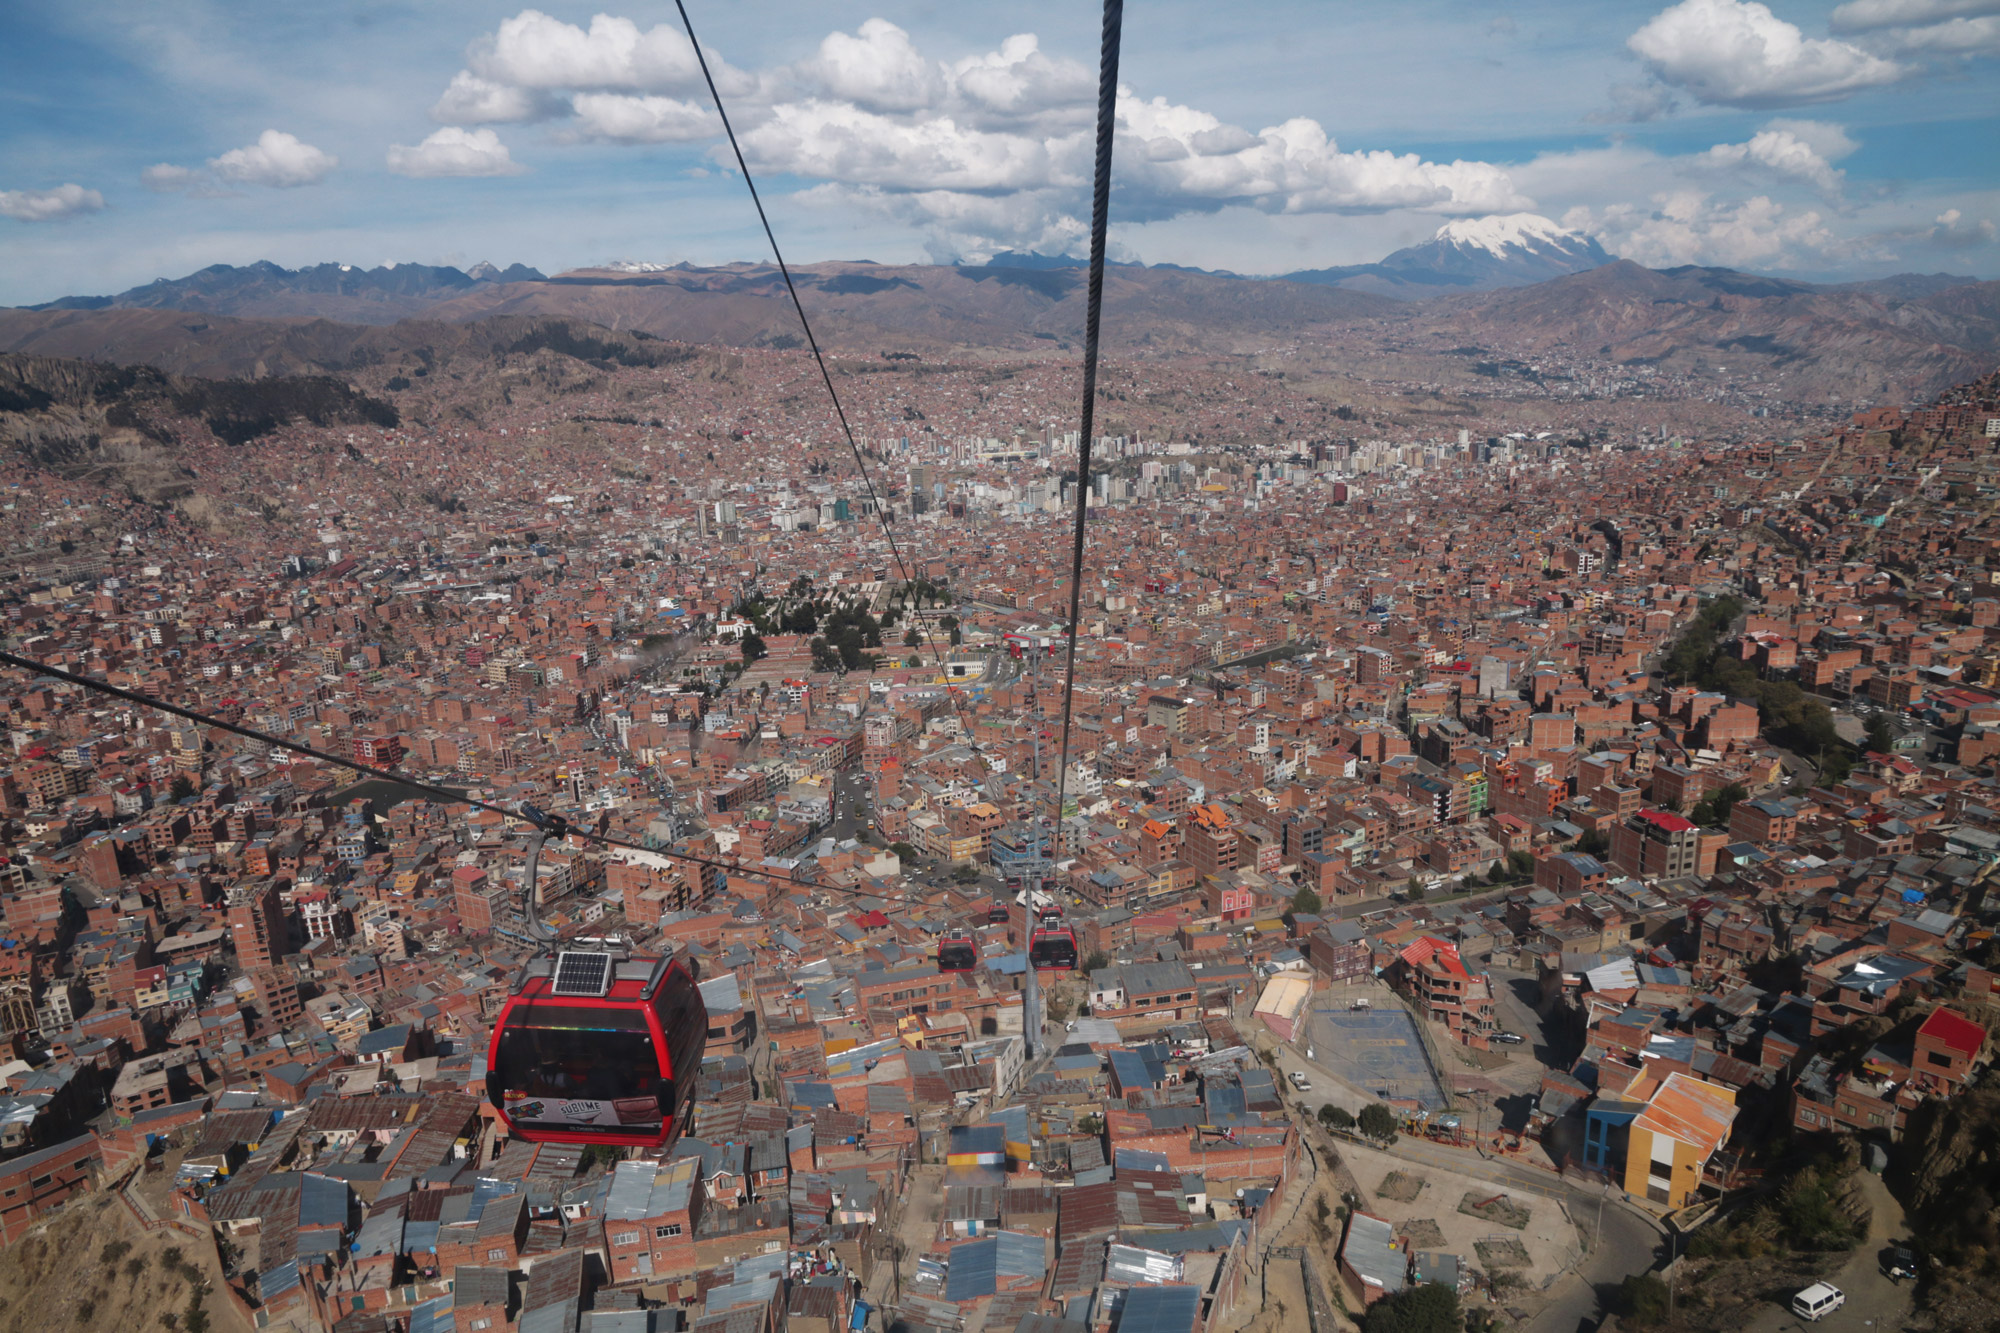 Reisverslaag Bolivia: We survived the Death Road - De rode kabelbaan van La Paz